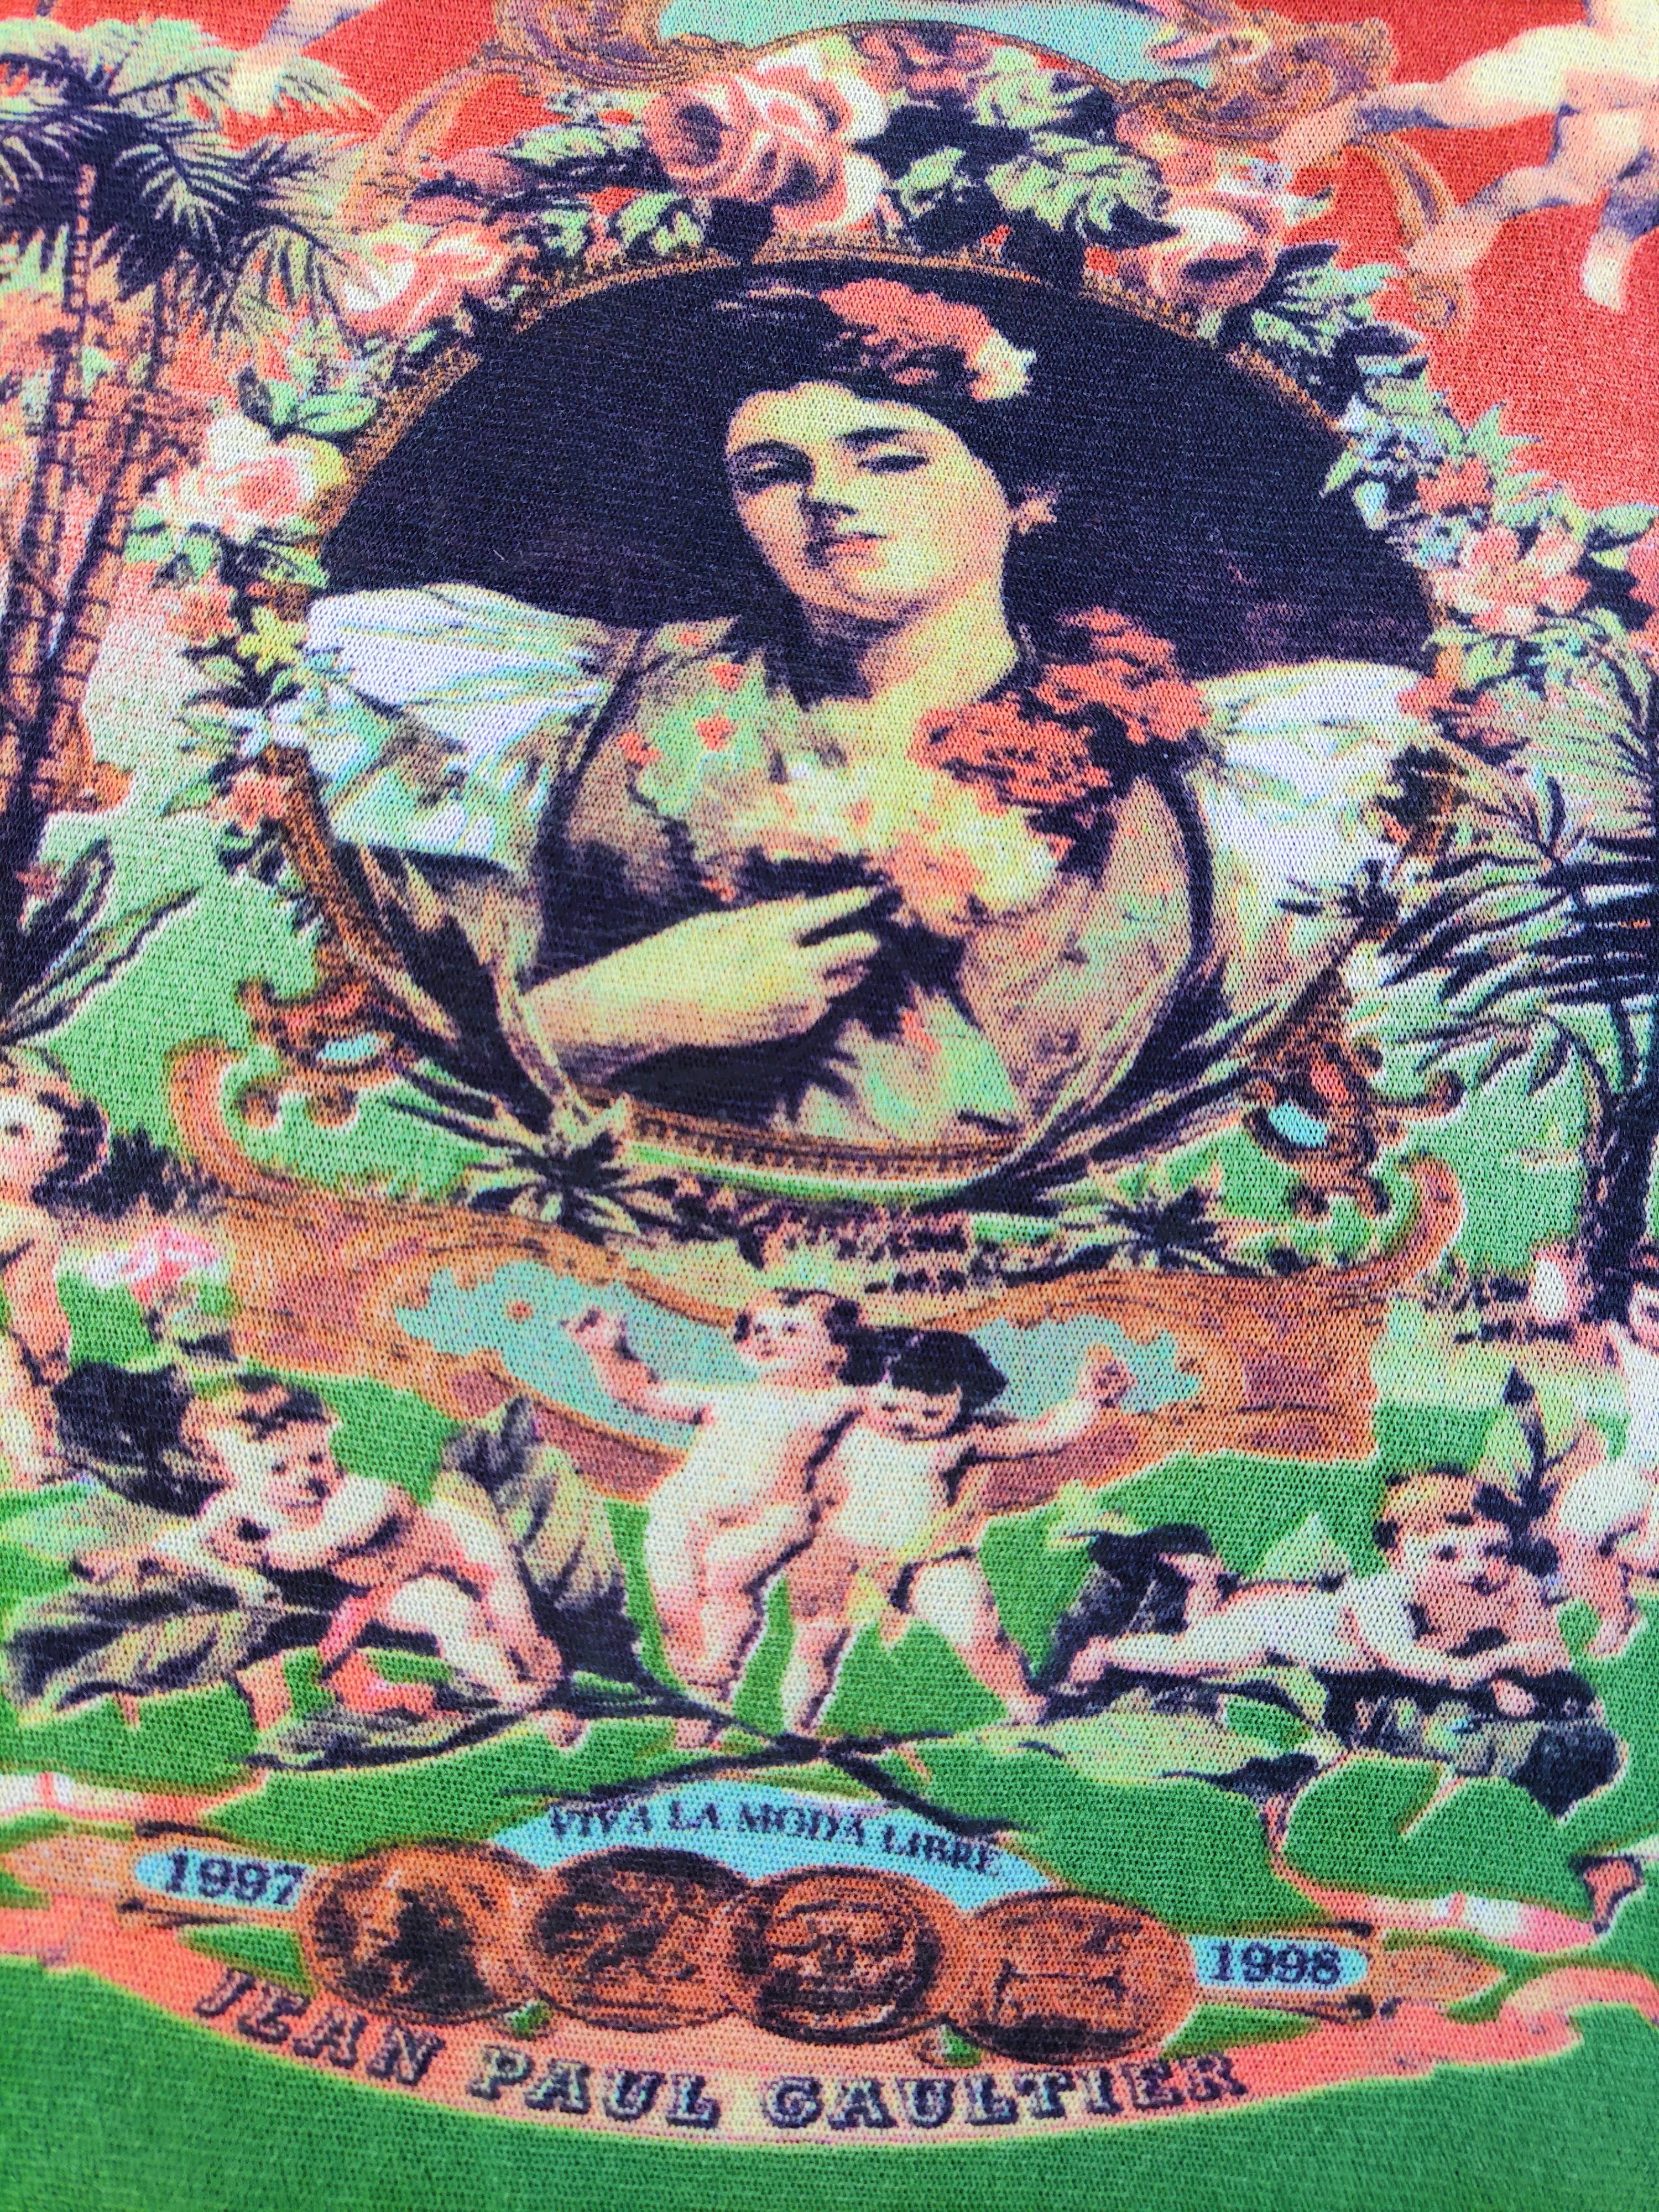 Marron Jean Paul Gaultier Frida Kahlo Mexique 1997 Mesh Transparent Top Pareo en vente